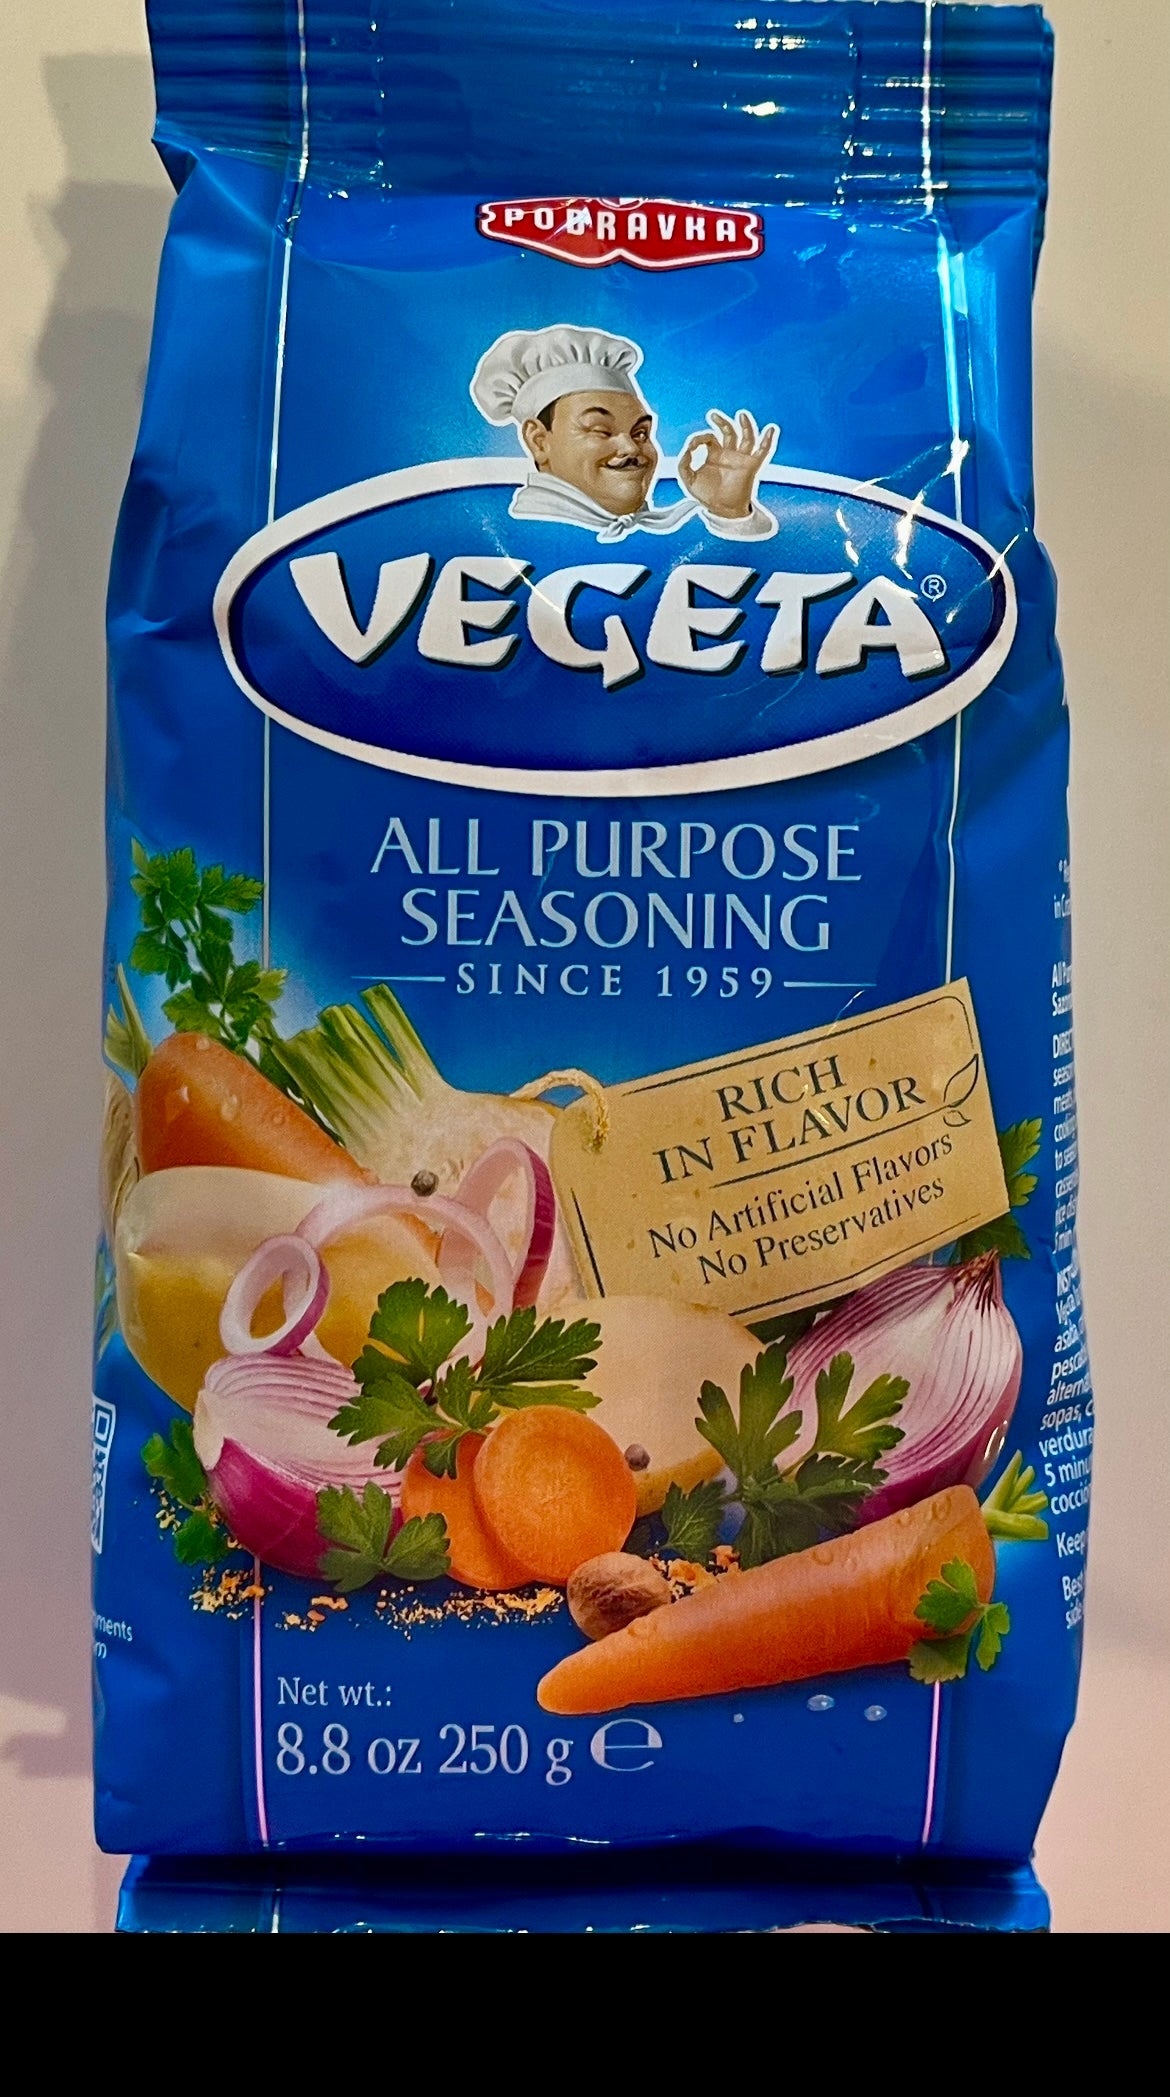 Vegeta-All Purpose Seasoning Bag (Made by Podravka)